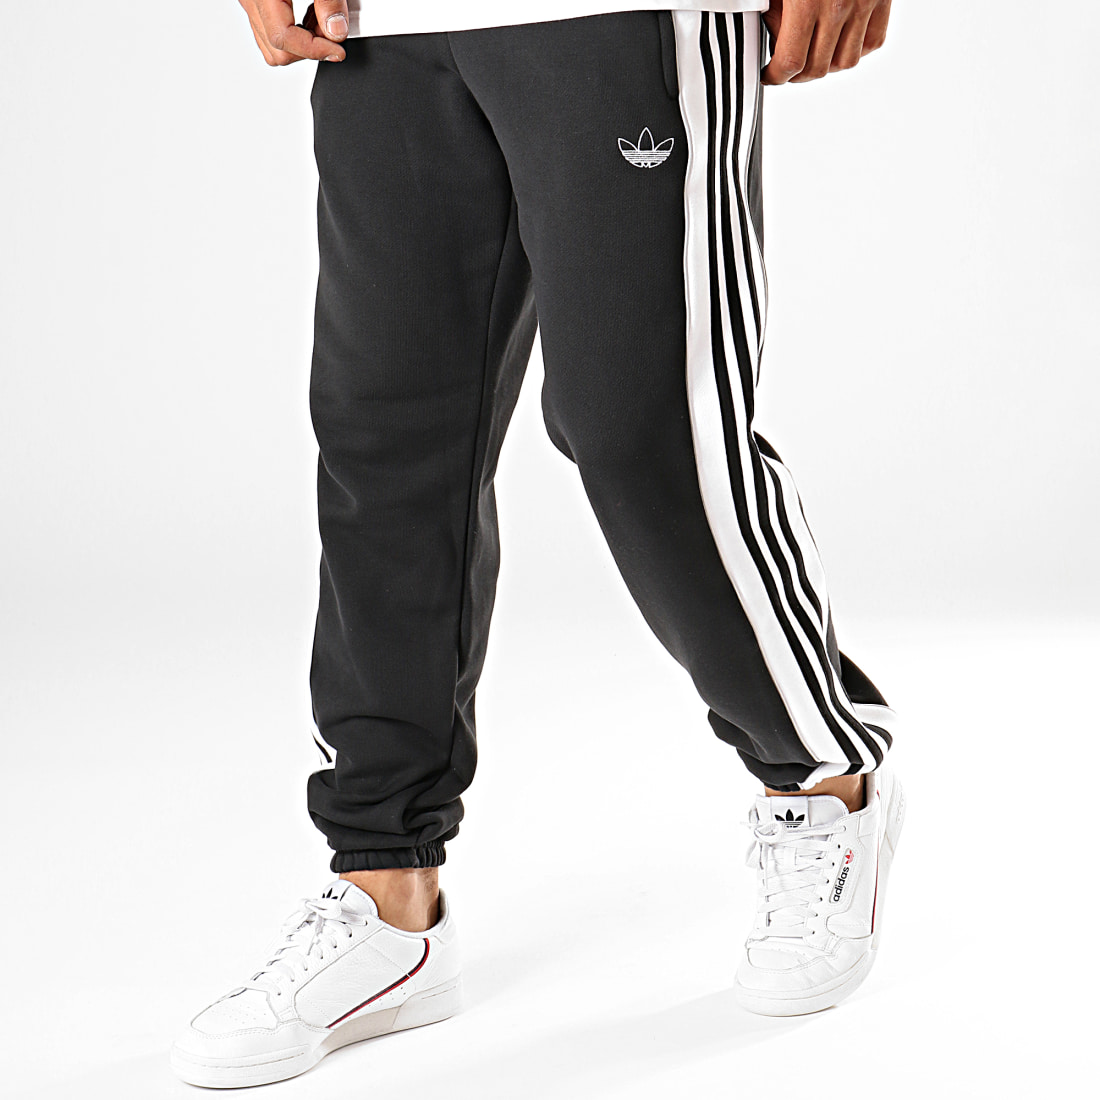 Adidas Originals 3 Stripes Panel Sweat ED6255 Black Pants Jogger ED6258 Grey Pants